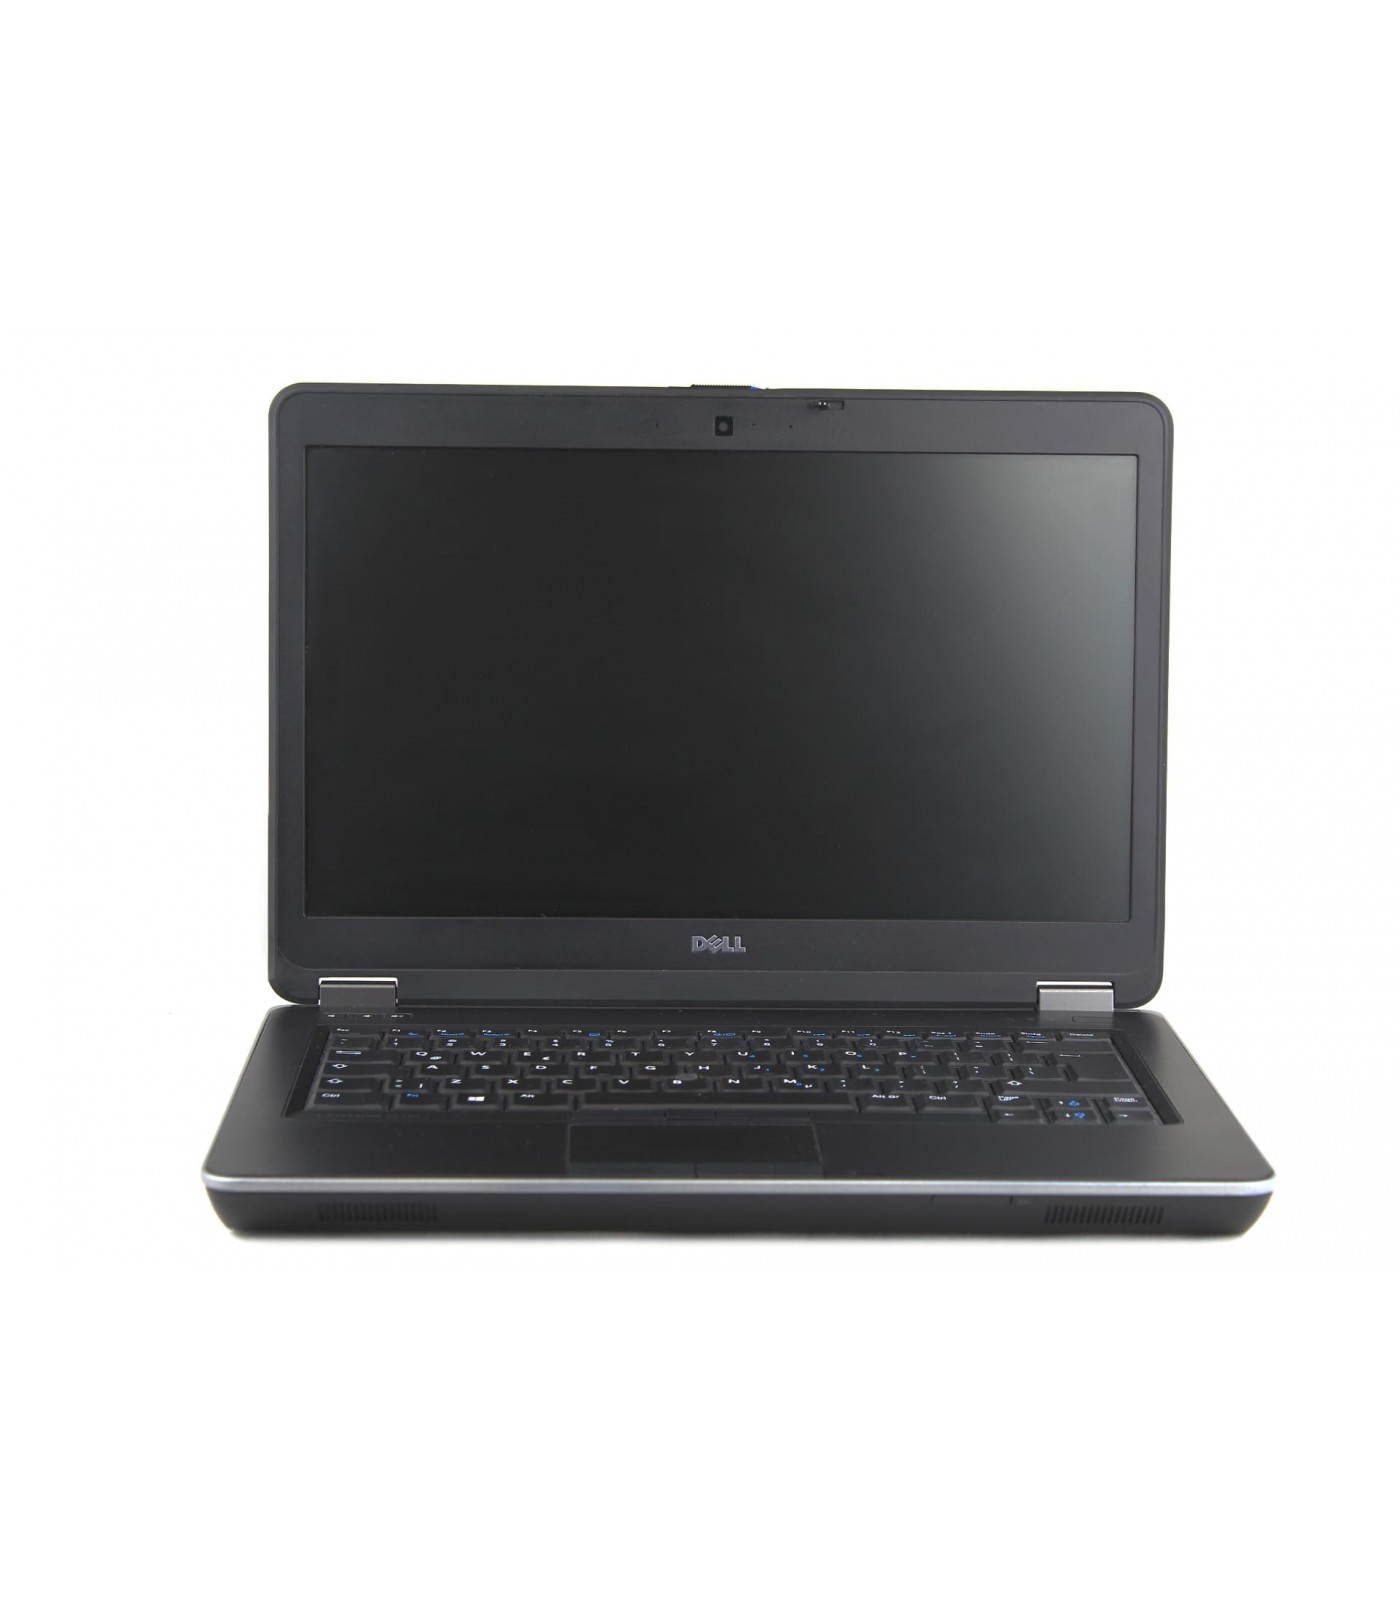 Poleasingowy Laptop Dell Latitude E6440 z procesorem i5-4310M